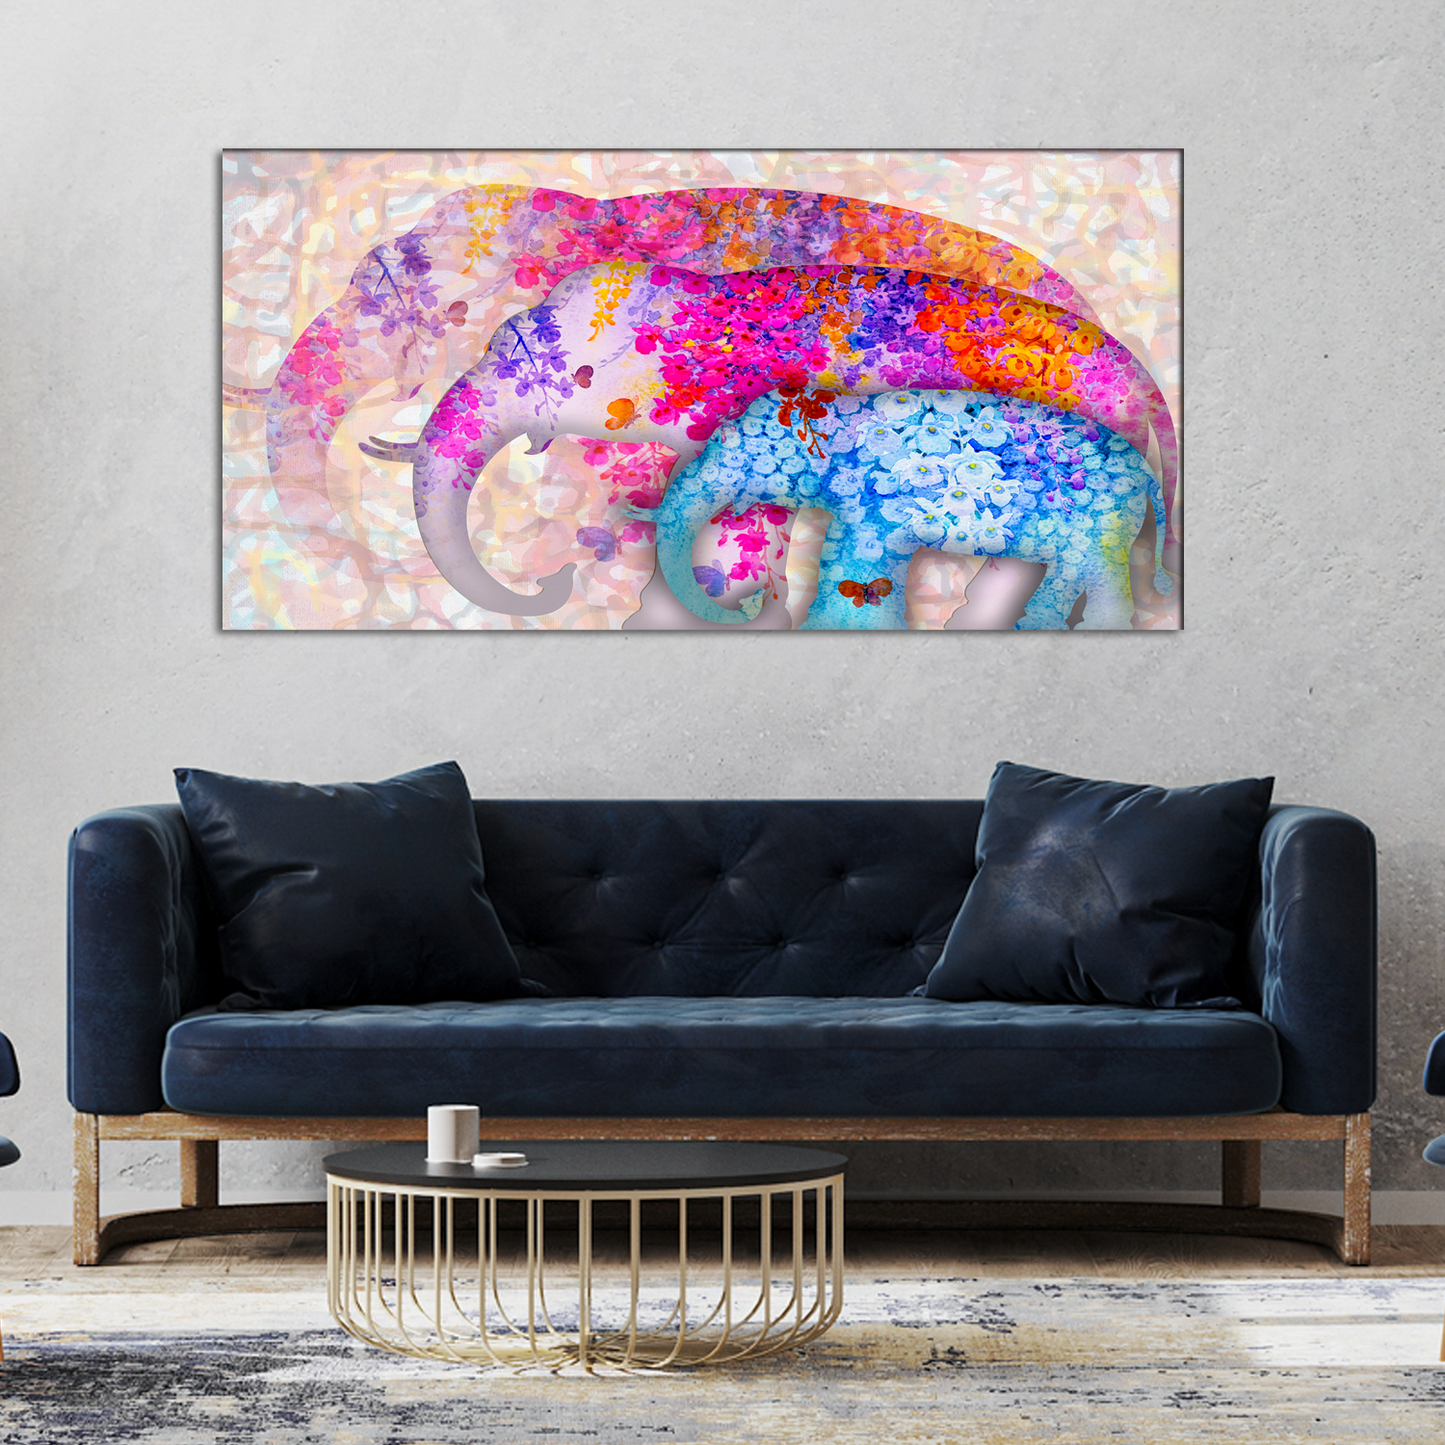 Three Abstract Art Elephants Canvas Wall Painting